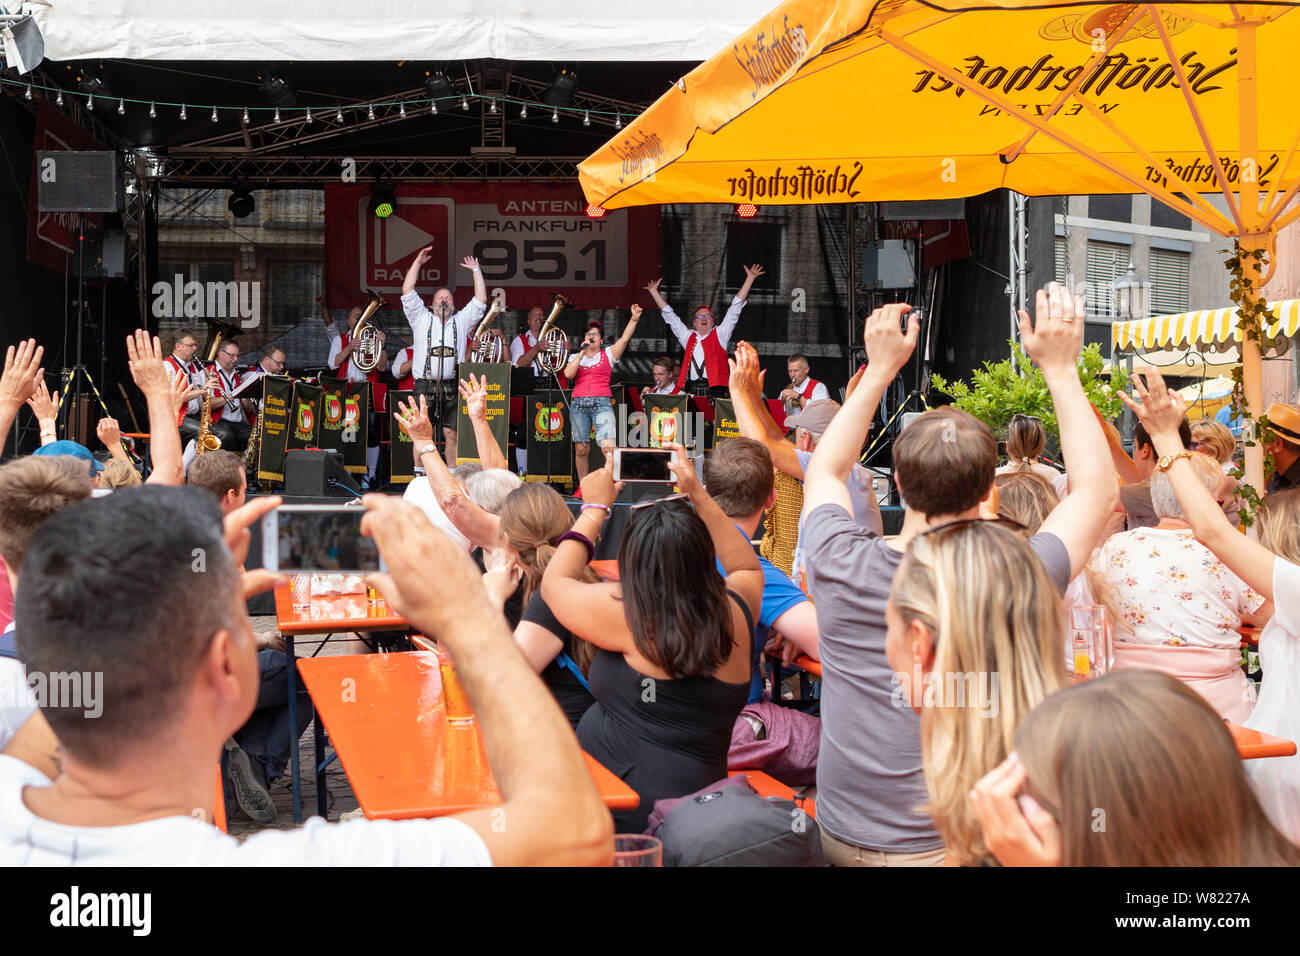 Main Festival or Mainfest 2019, a traditional german folk festival held in Romerberg, Frankfurt am Main, Germany, Europe Stock Photo